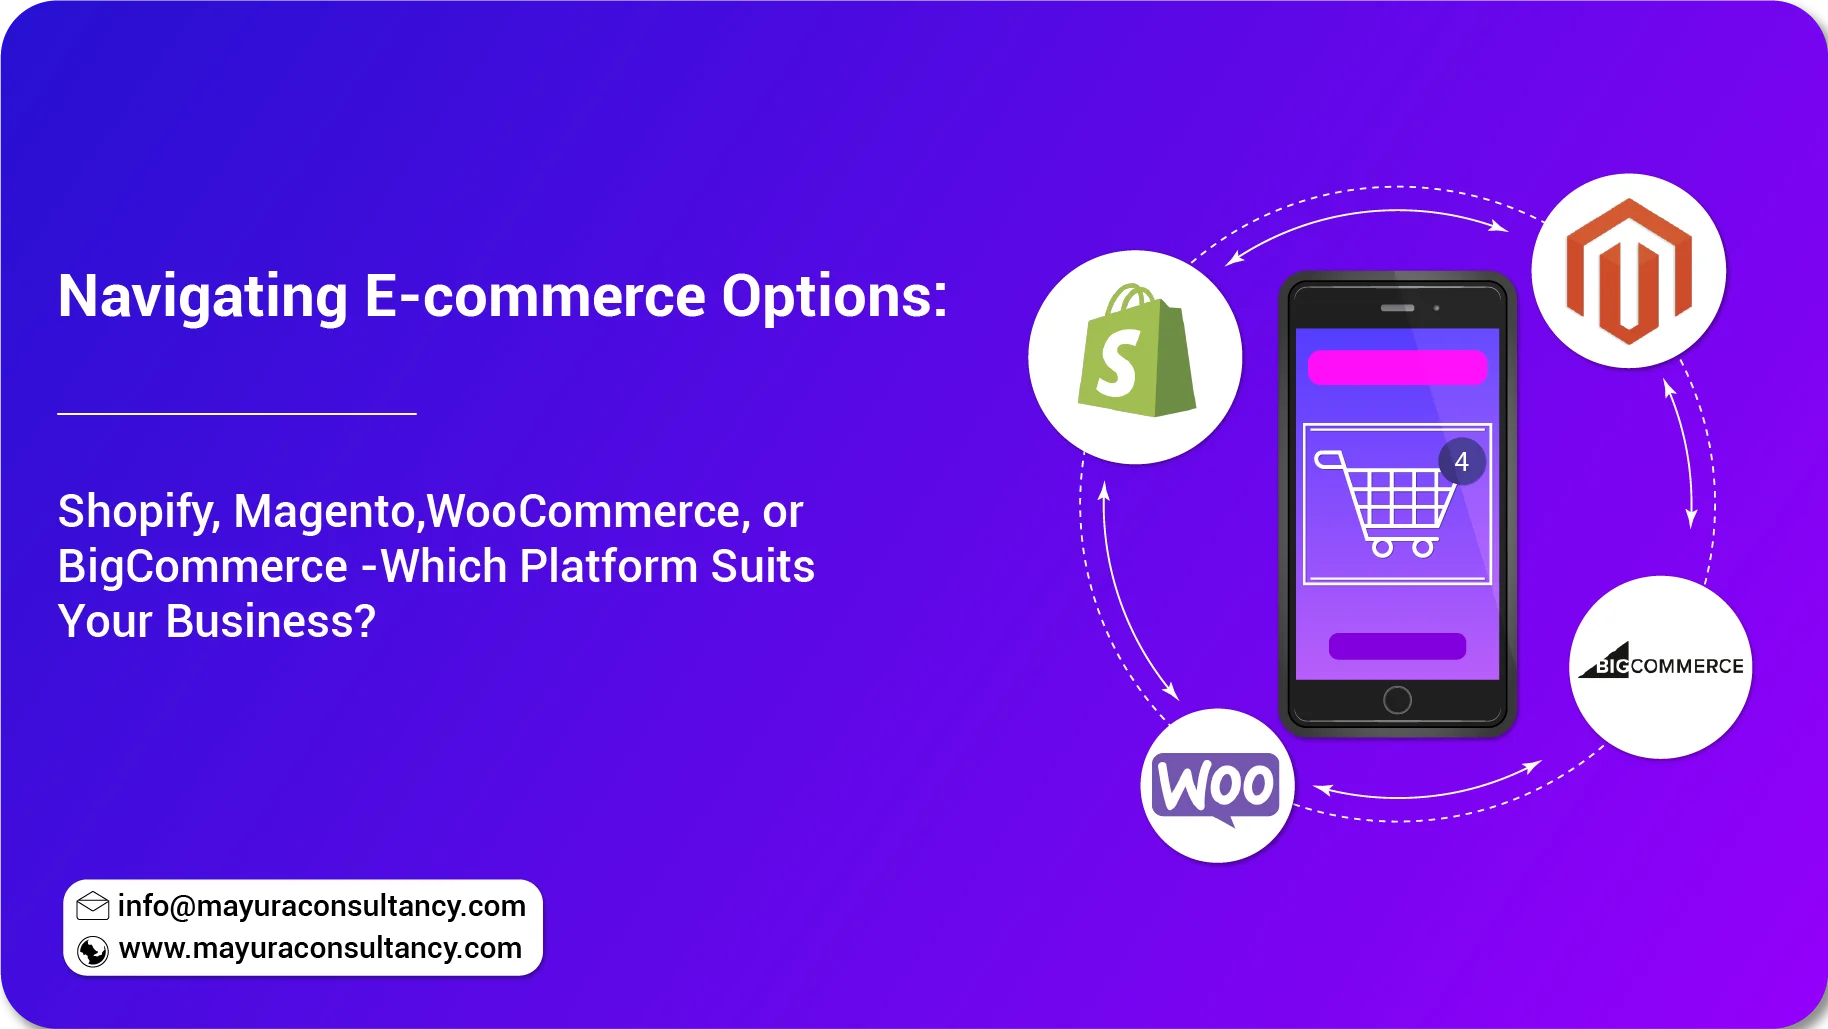 Shopify vs Magento vs Woocommerce vs Bigcommerce - Which Ecommerce Platform to Choose?